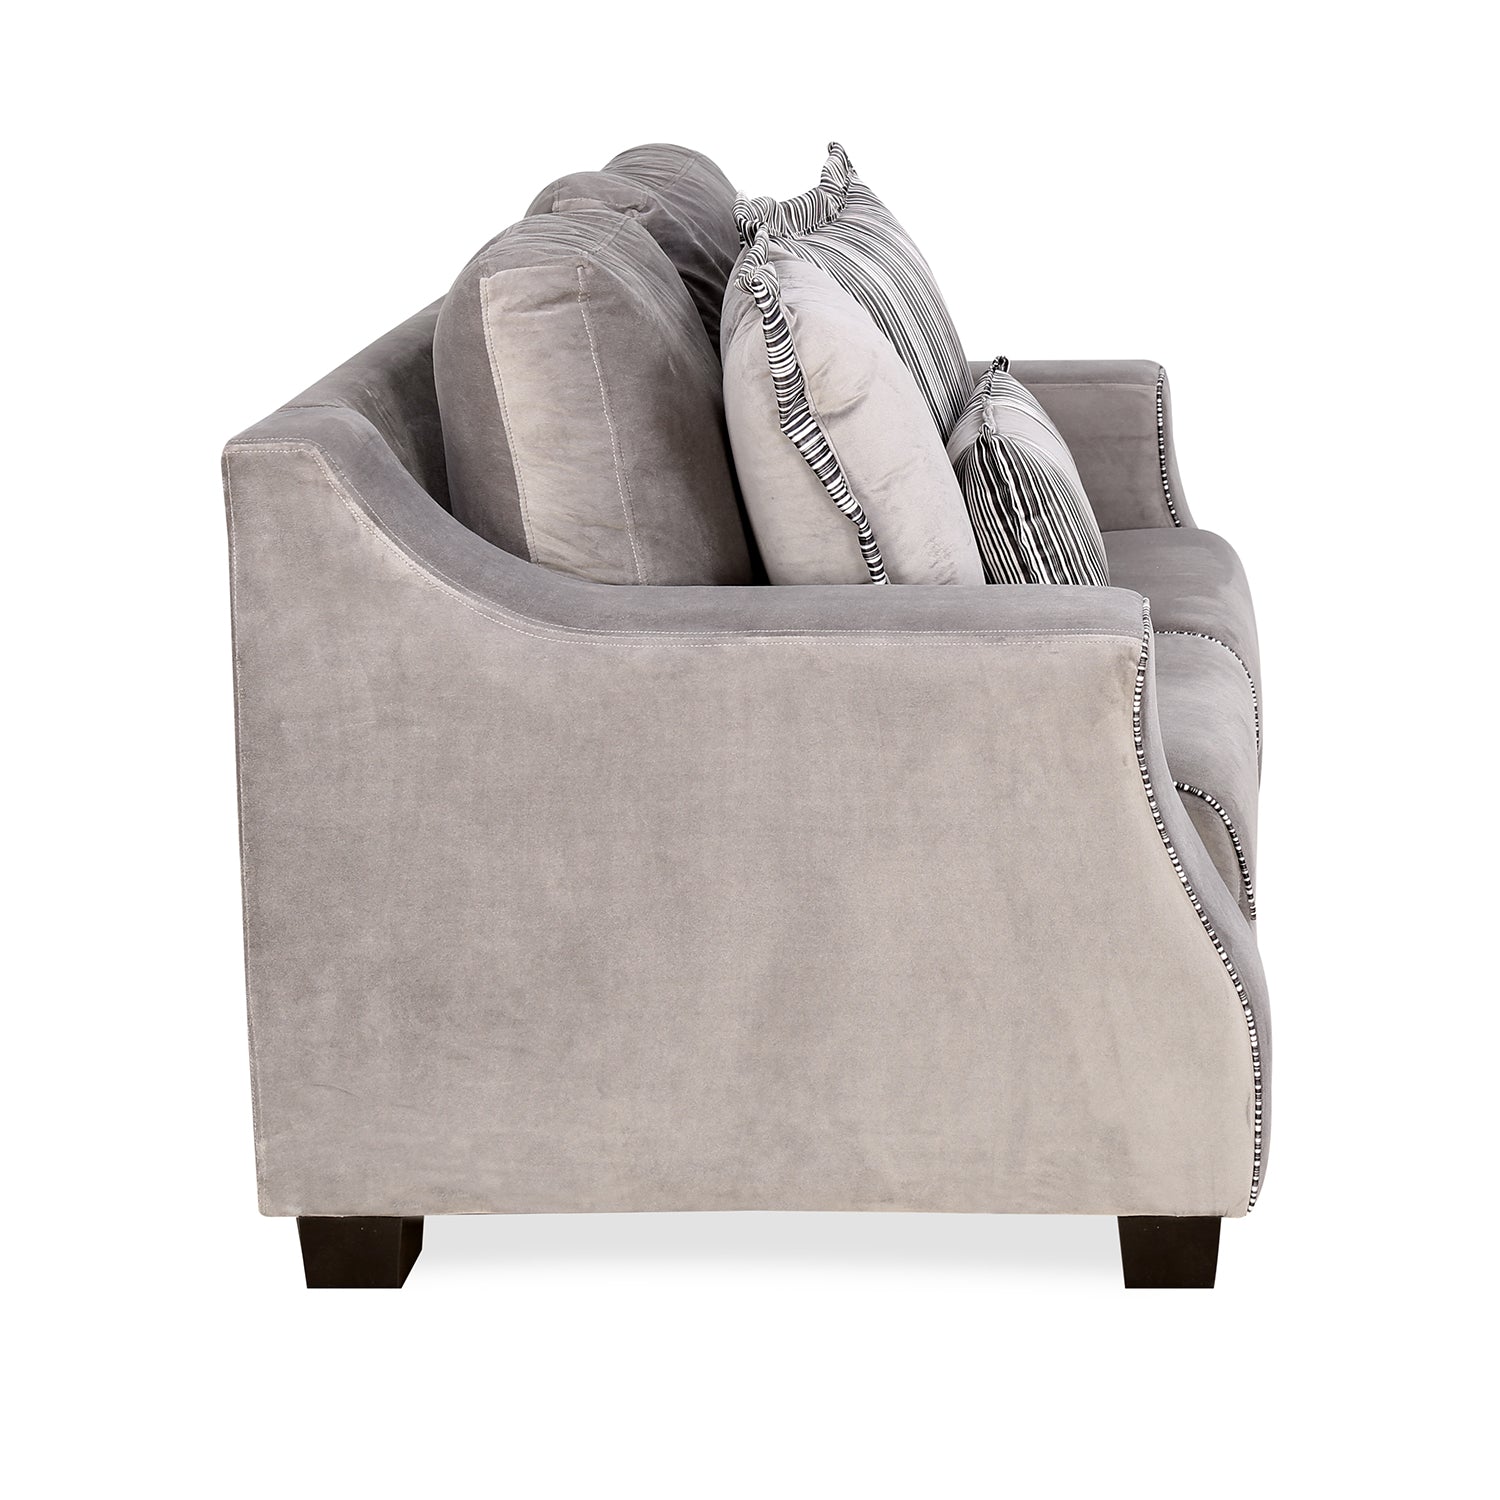 Bliss 2 Seater Sofa (Grey)